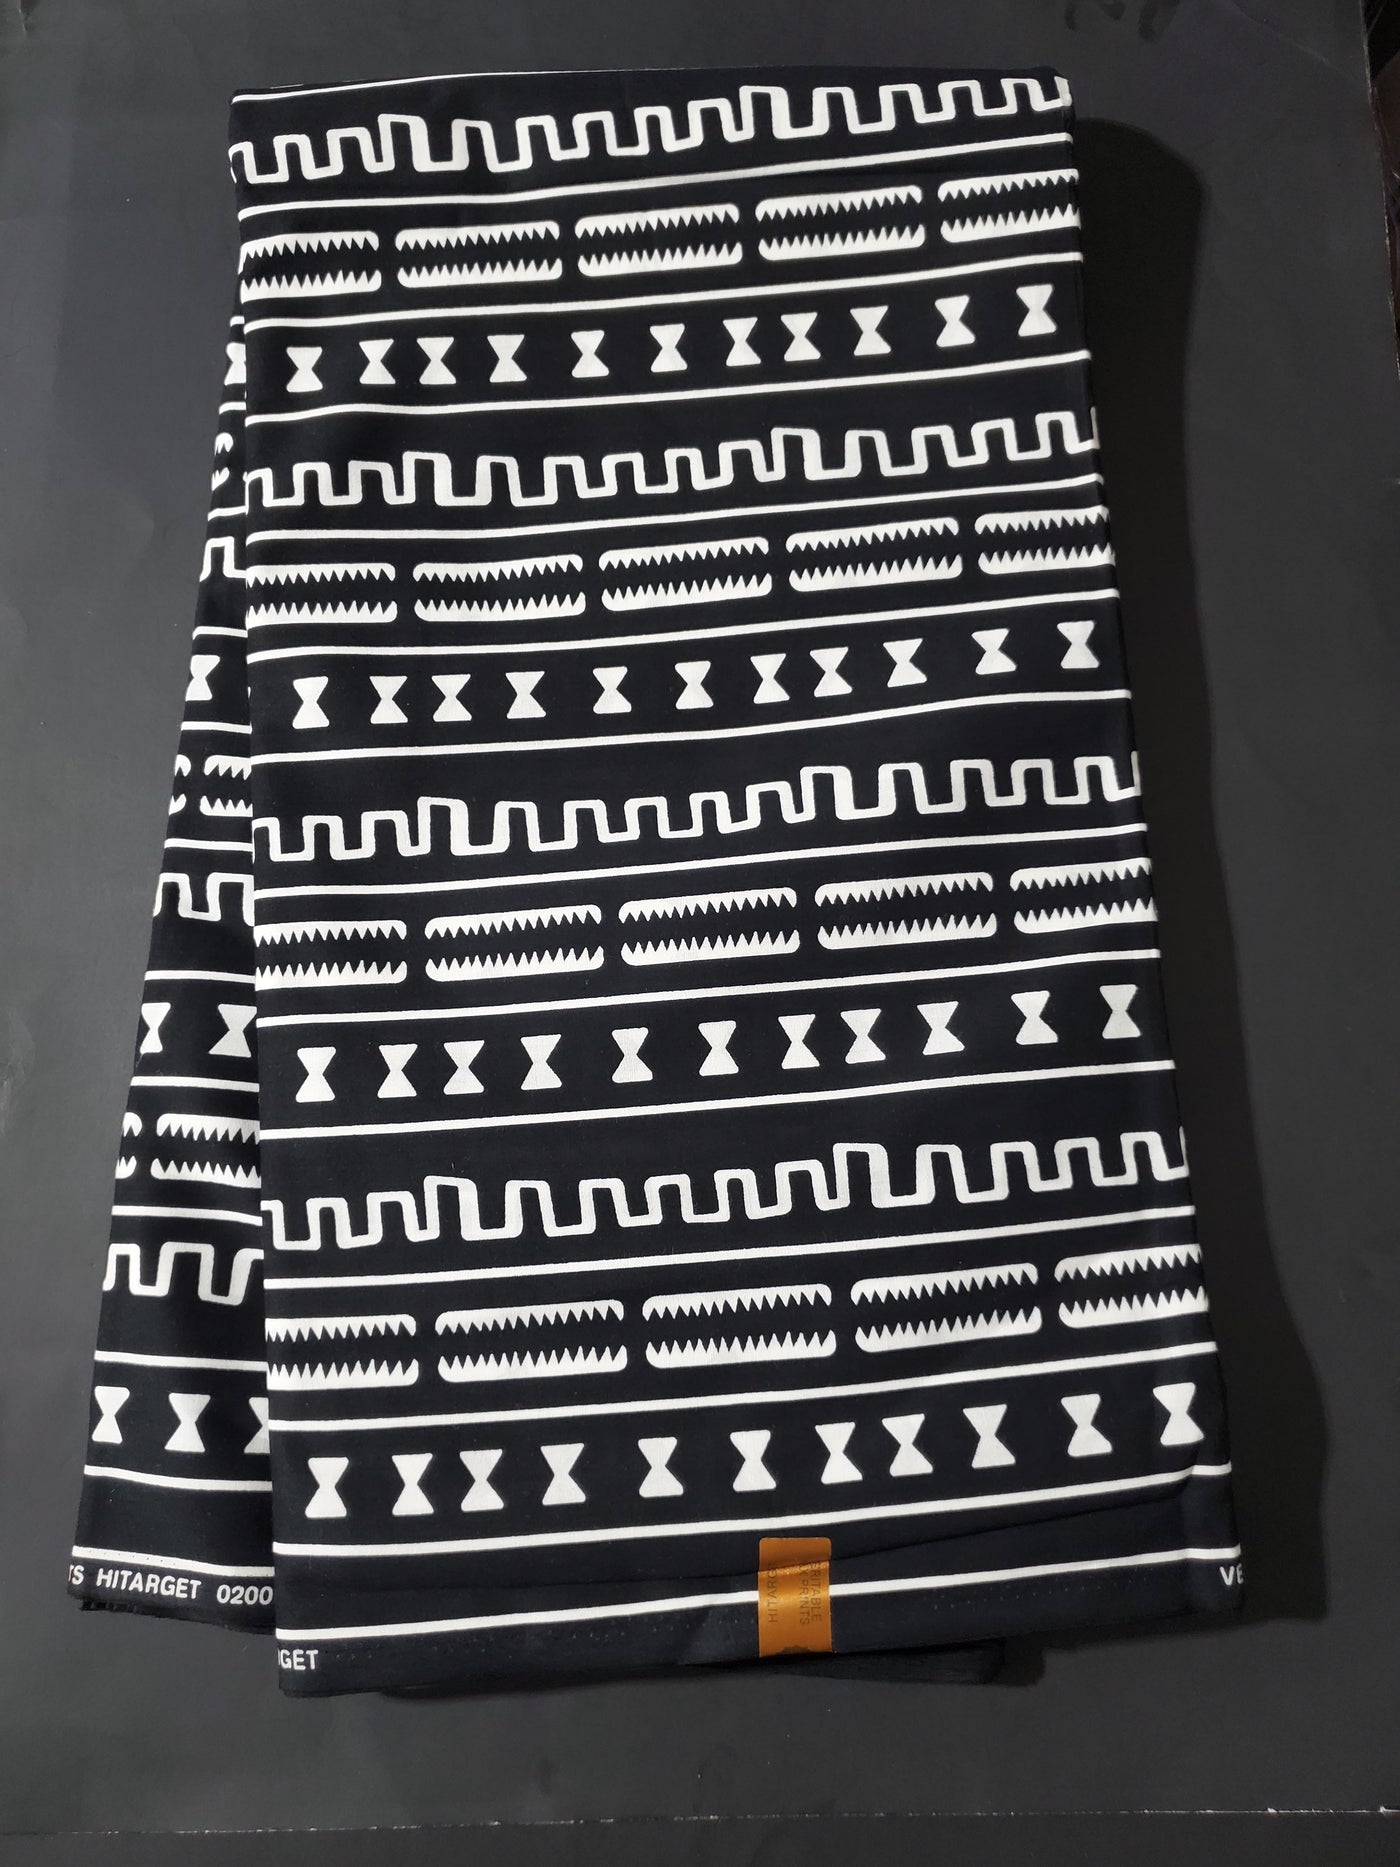 Black and White African Ankara Fabric